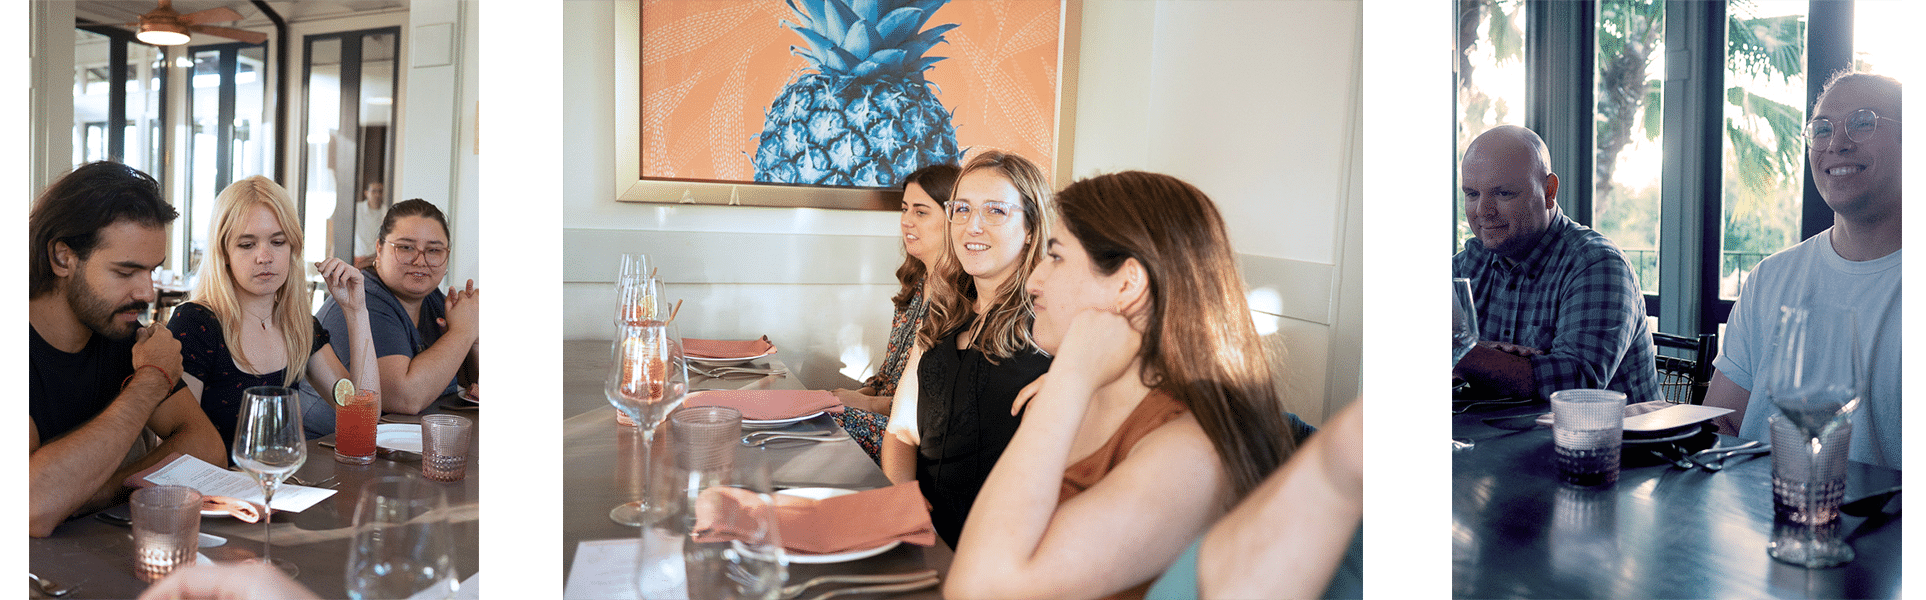 playfair data team enjoying dinner at the four flamingos restaurant at the hiatt regency grand cypress resort in orlando florida for their team summit 2023